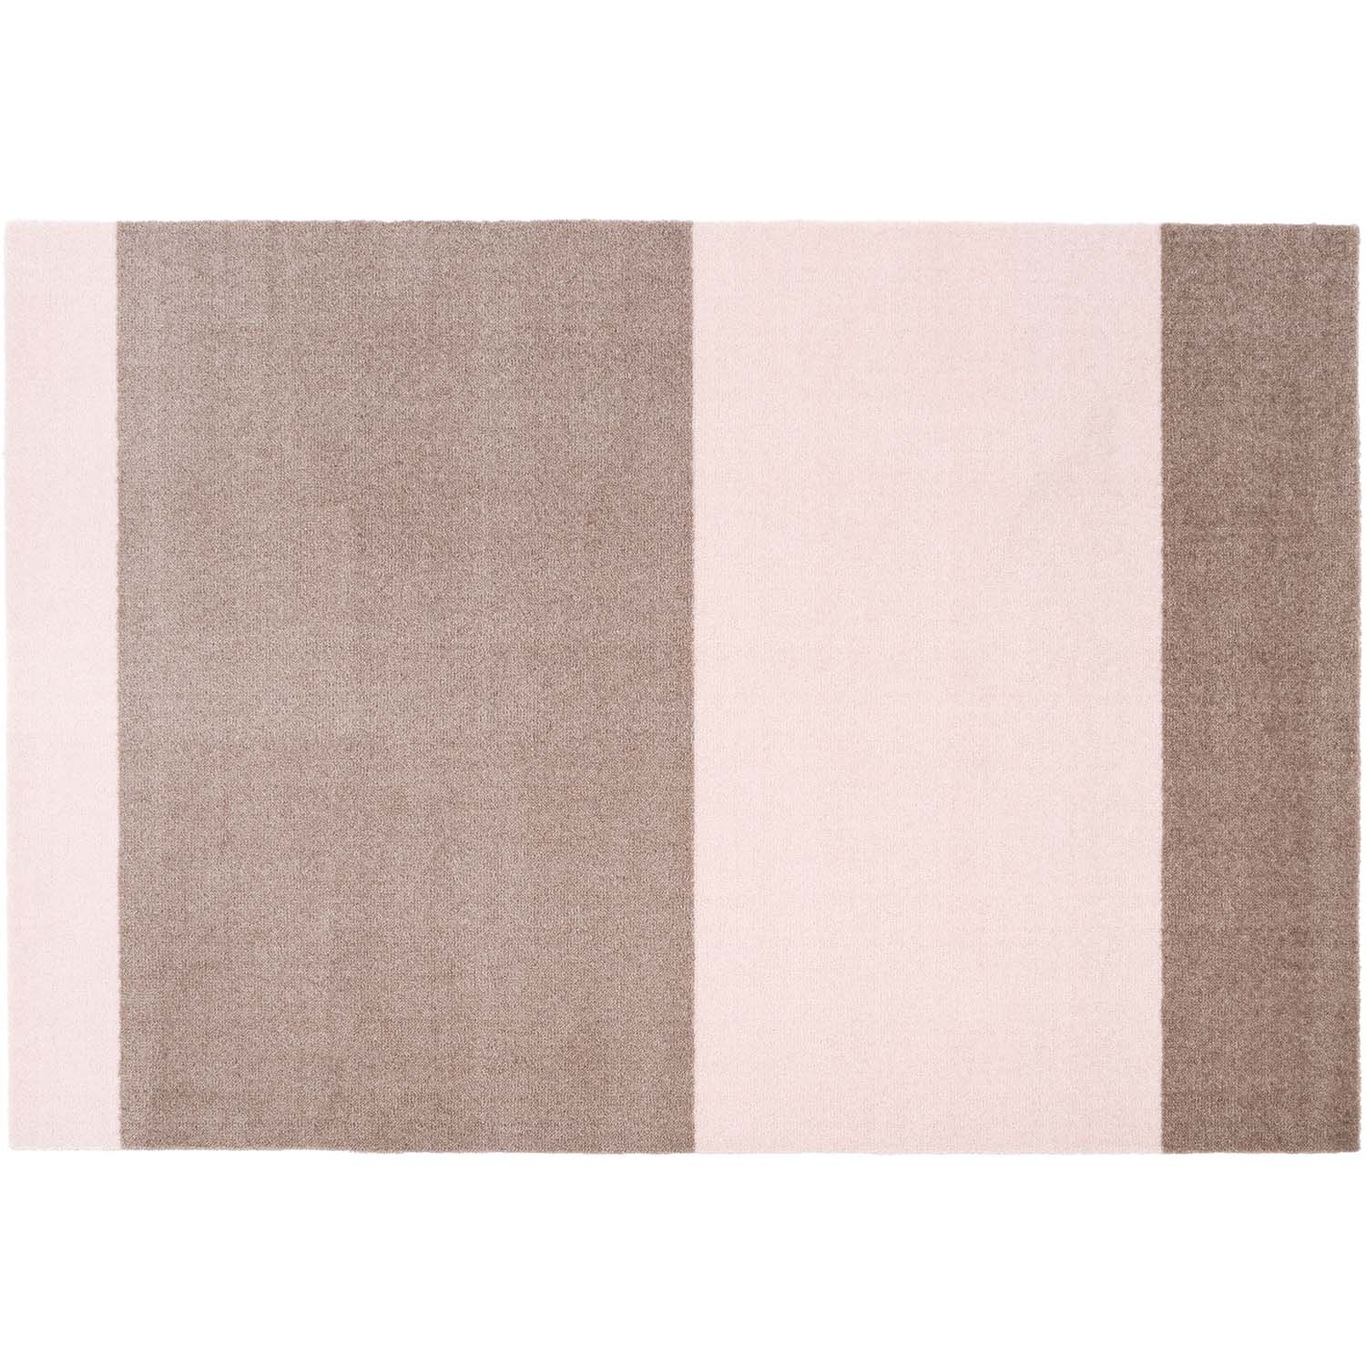 Stripes Teppich Sandfarben/Light Rose, 90x130 cm